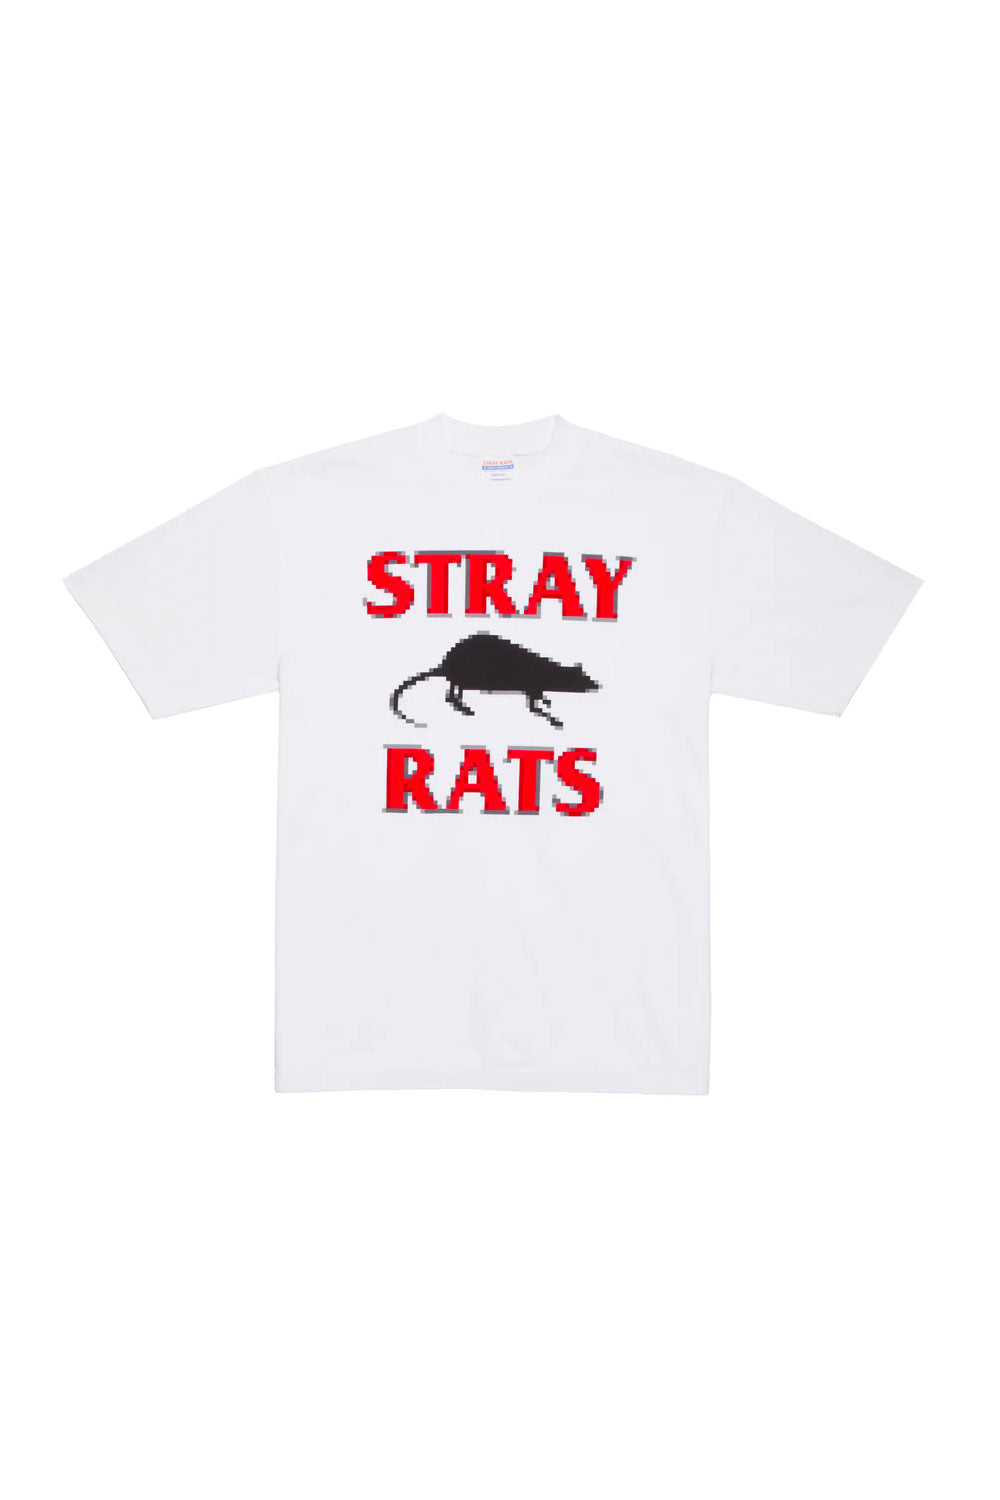 stray rats t shirt white